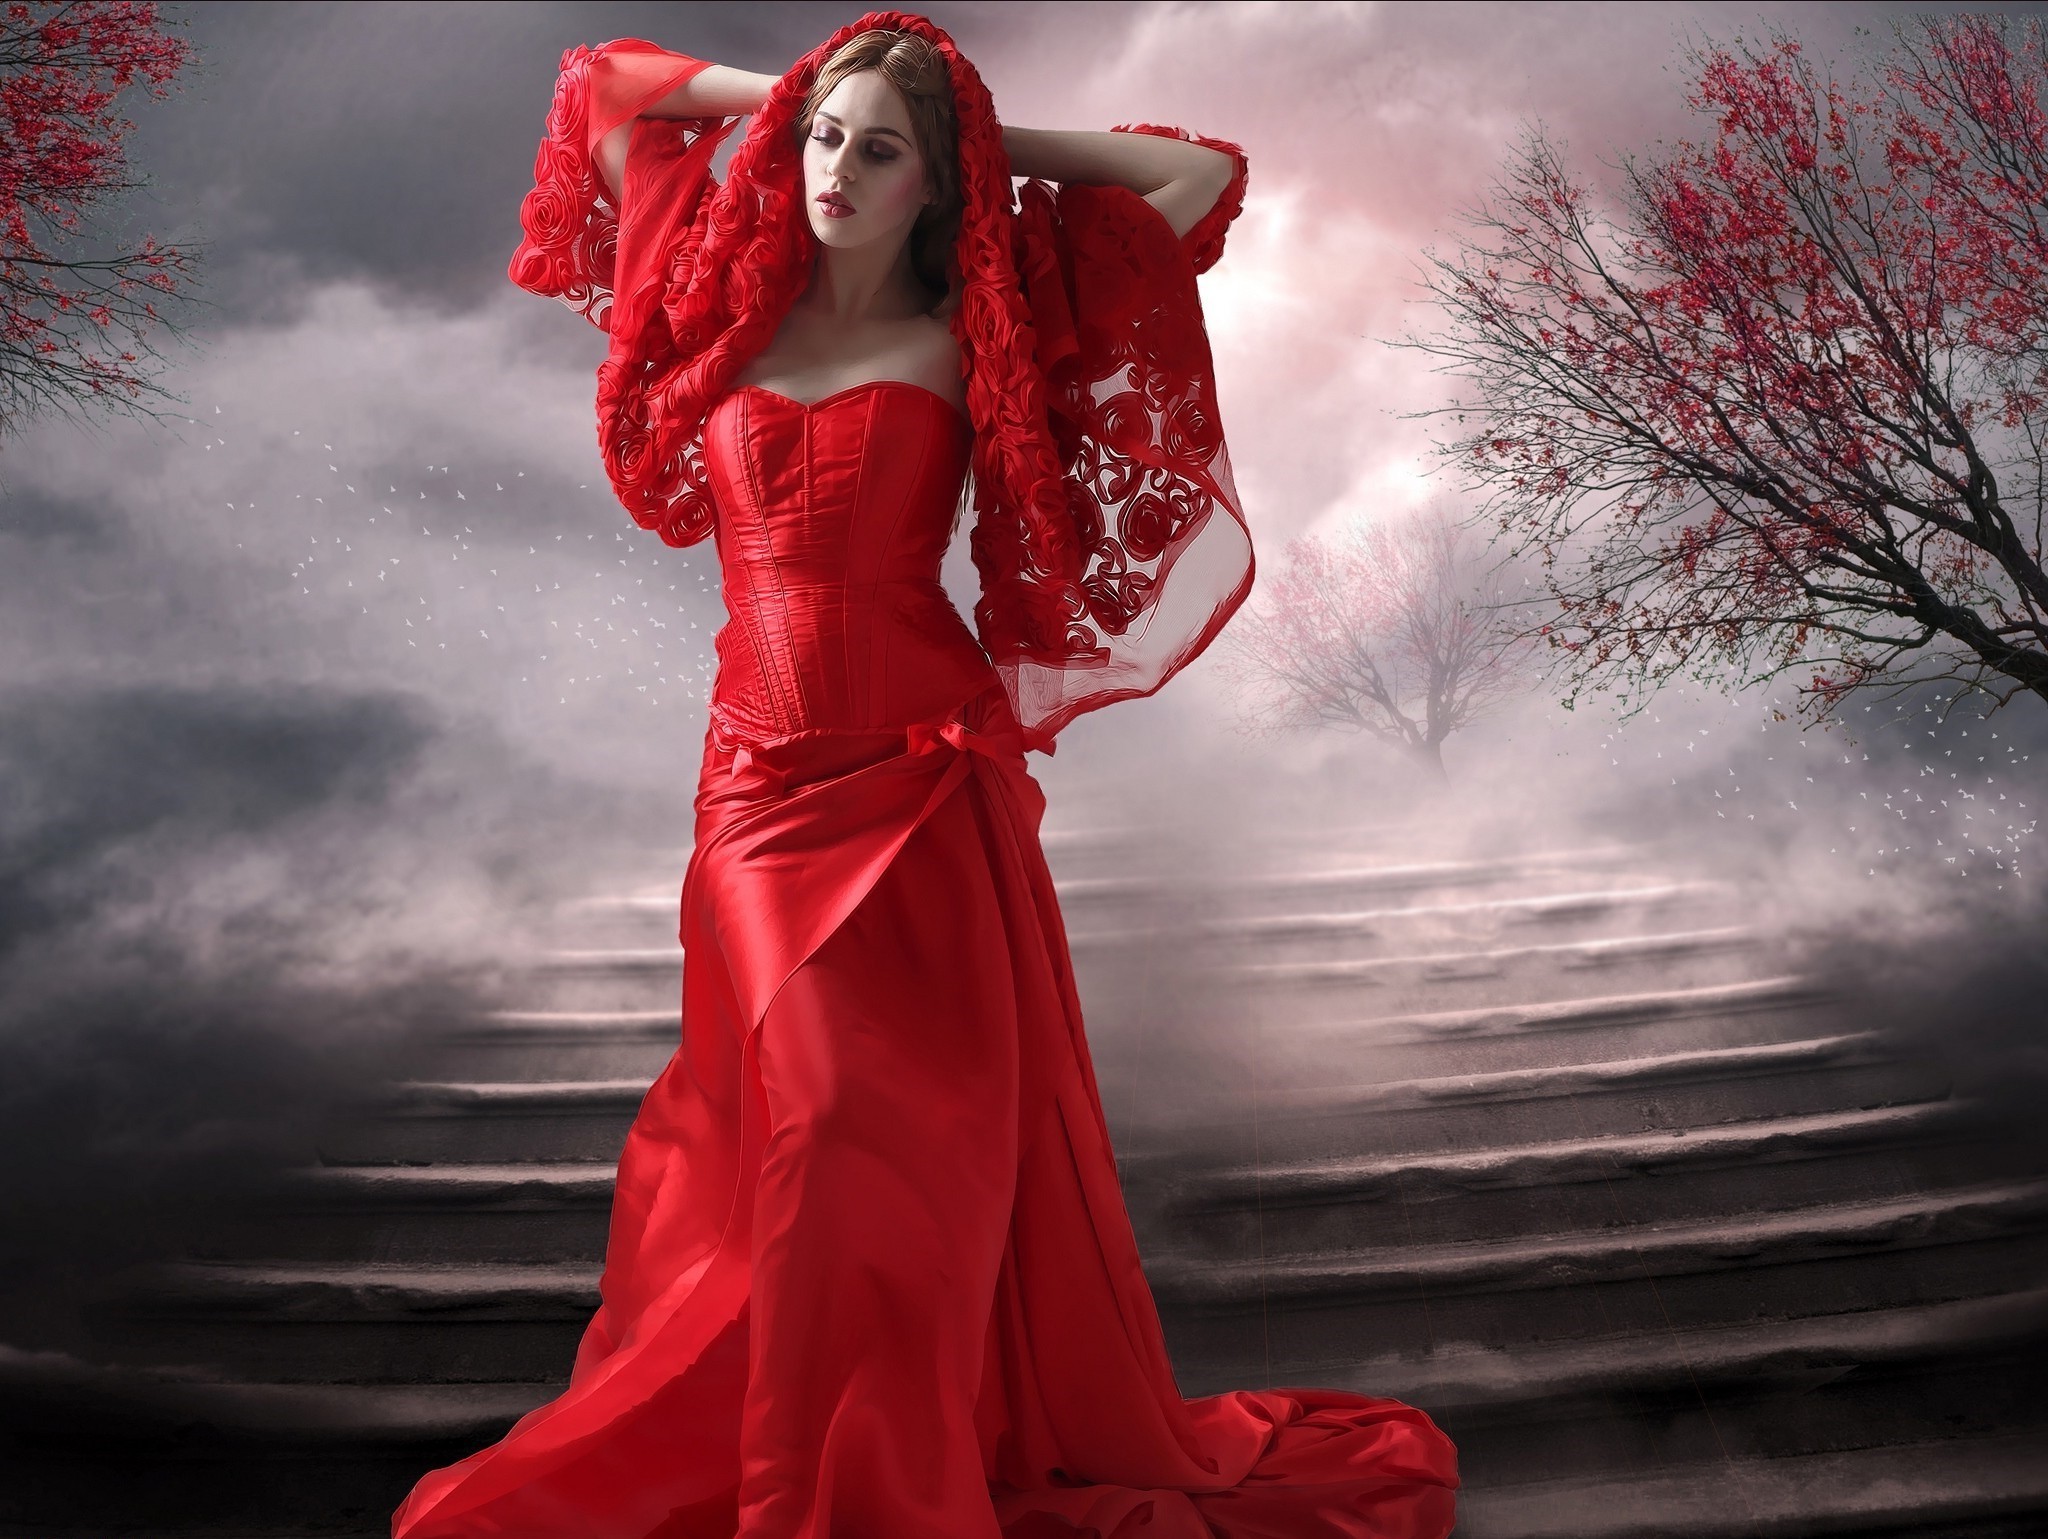 Wallpaper, women, red, dress, romance, flower, beauty, woman, lady, gown, 2048x1539 px 2048x1539